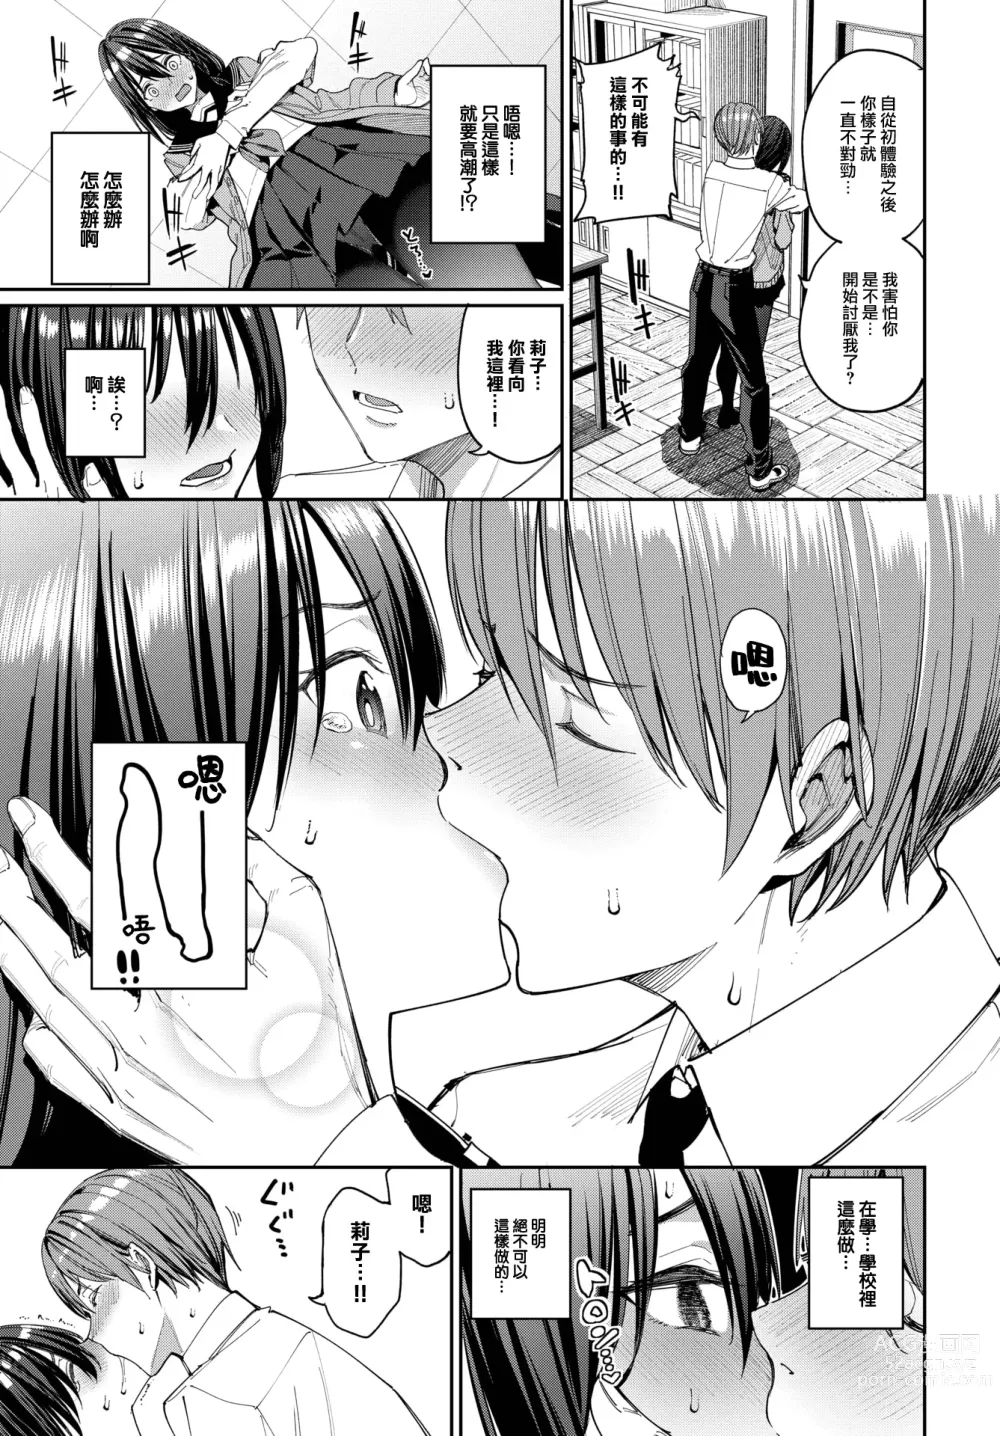 Page 7 of manga Riko no Hatsujou Chuuihou! - Im in heat so much. I can't take it...